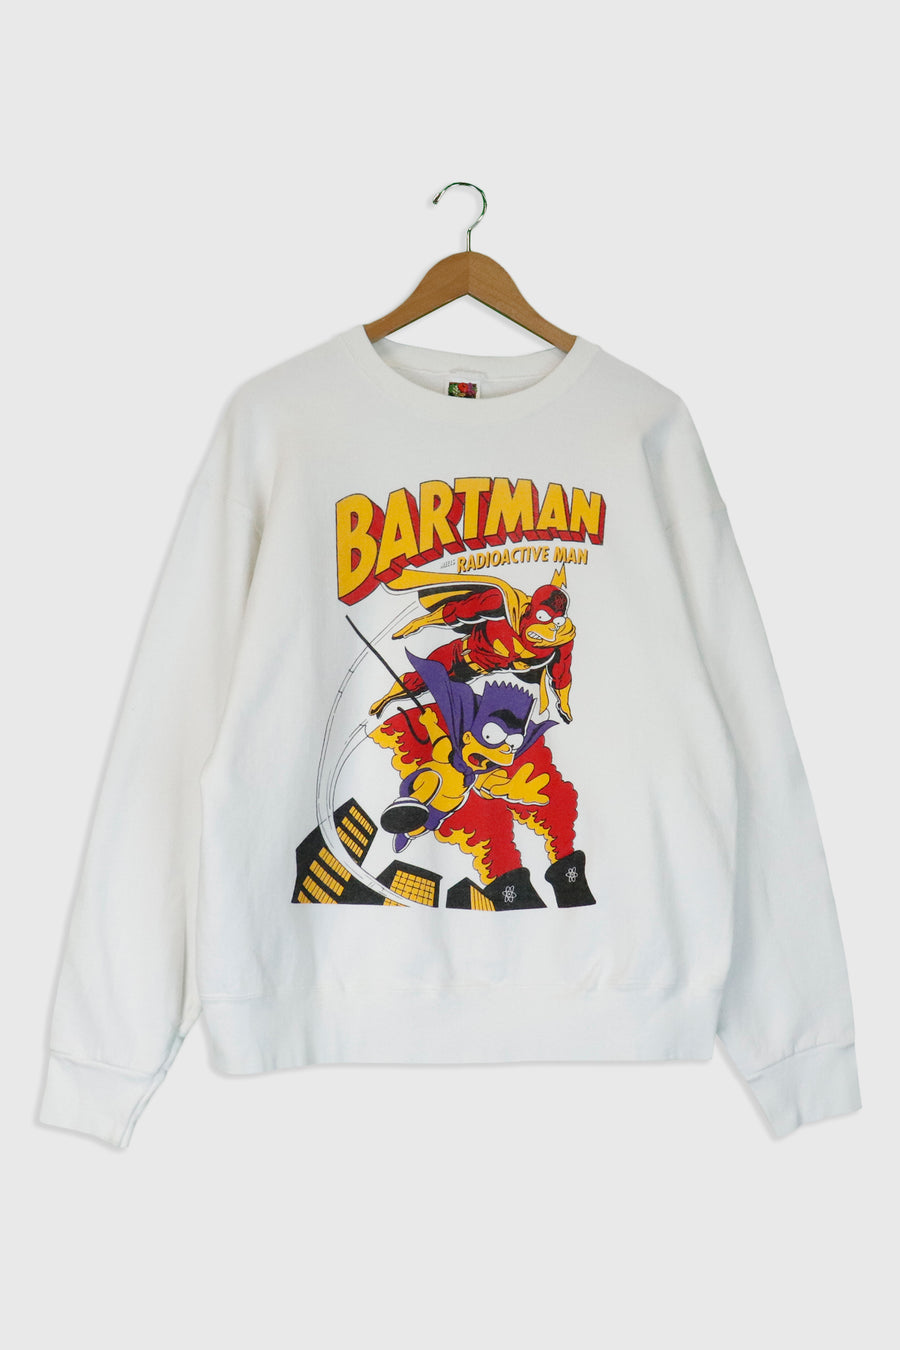 Vintage The Simpsons 'Bartman Meets Radioactive Man' Sweatshirt Sz XL